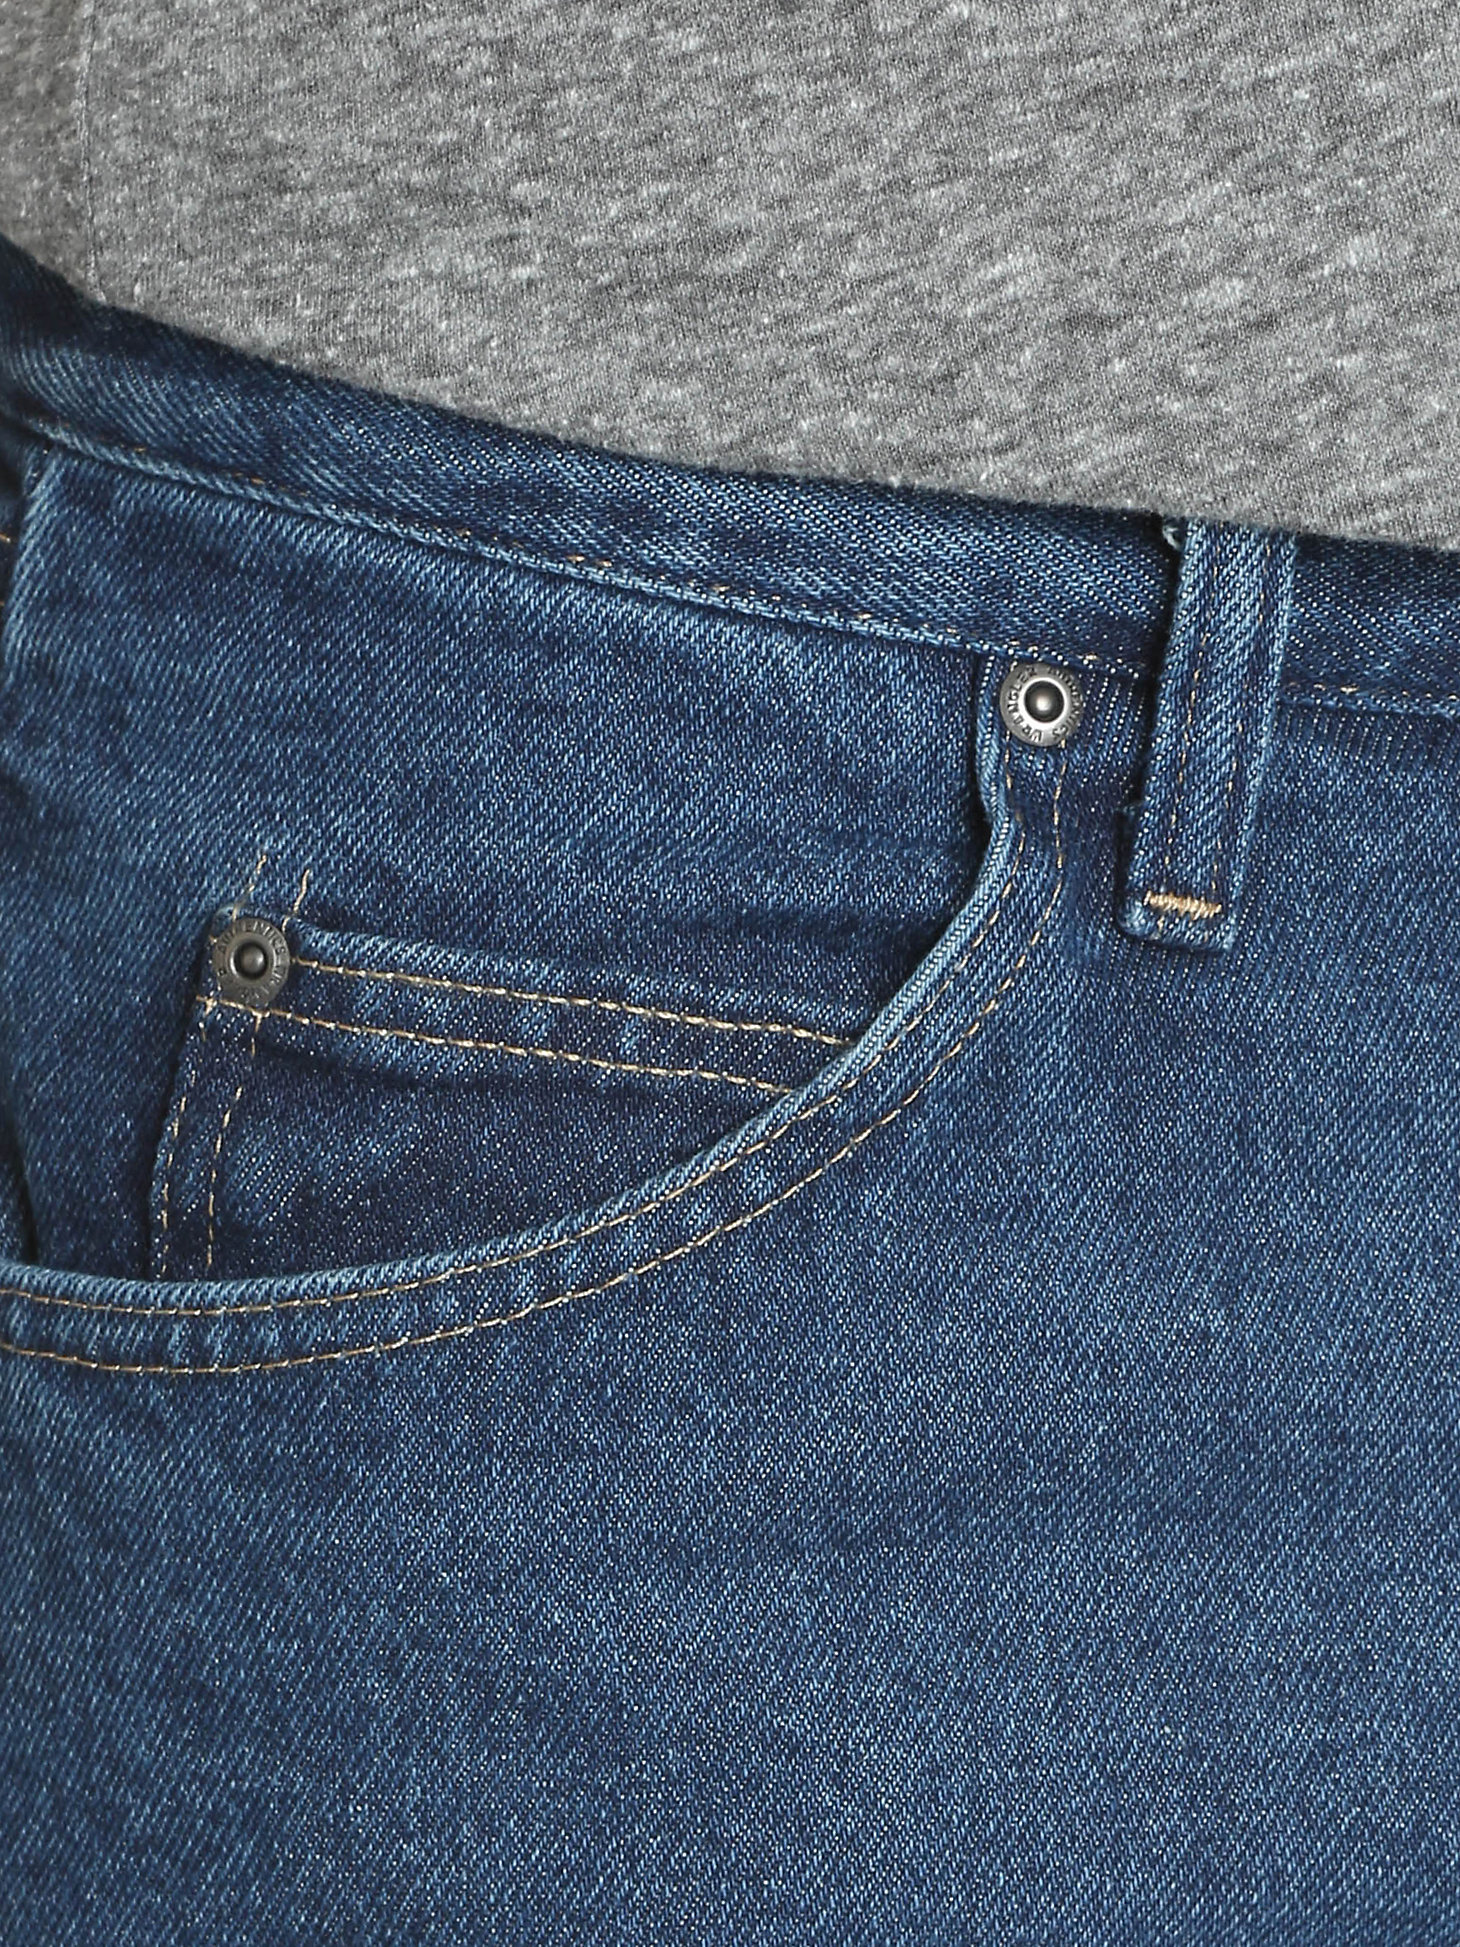 Men's Wrangler Authentics® Relaxed Fit Cotton Jean in Dark Stonewash alternative view 4